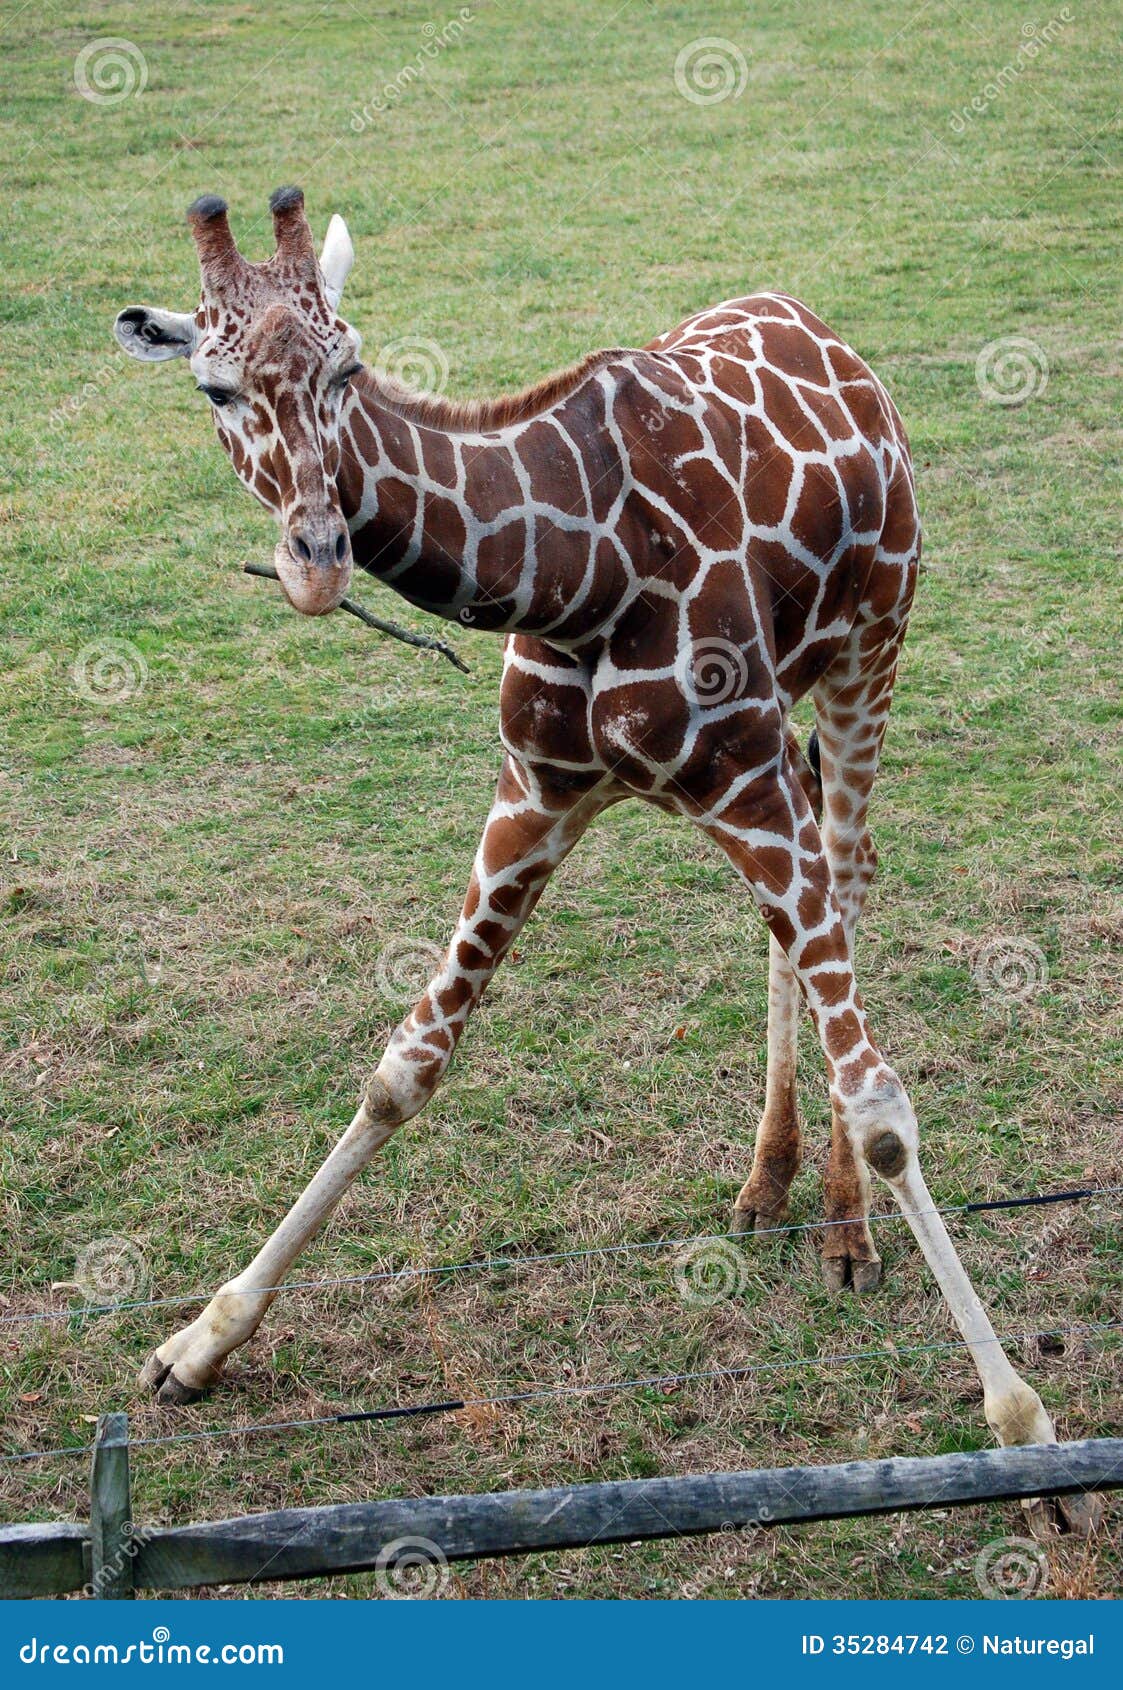 baby-giraffe-munching-twig-full-body-shot-splayed-front-legs-35284742.jpg